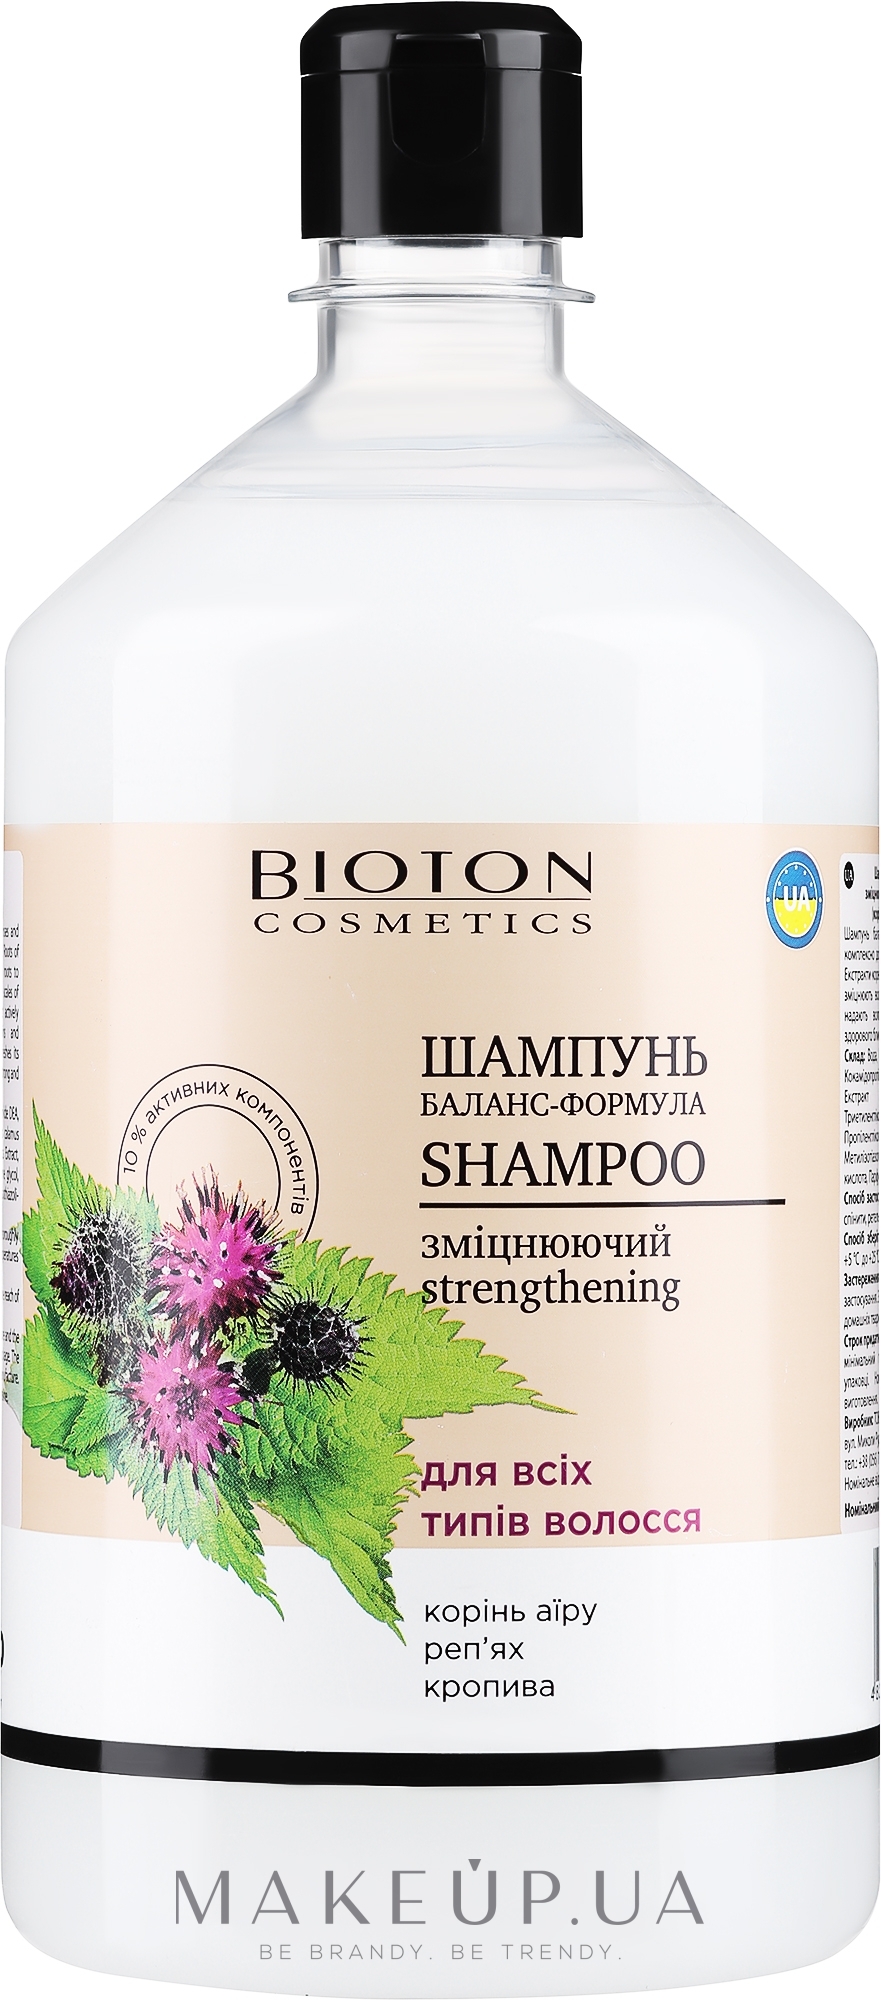 Шампунь баланс-формула укрепляющий для всех типов волос - Bioton Cosmetics Shampoo — фото 1000ml